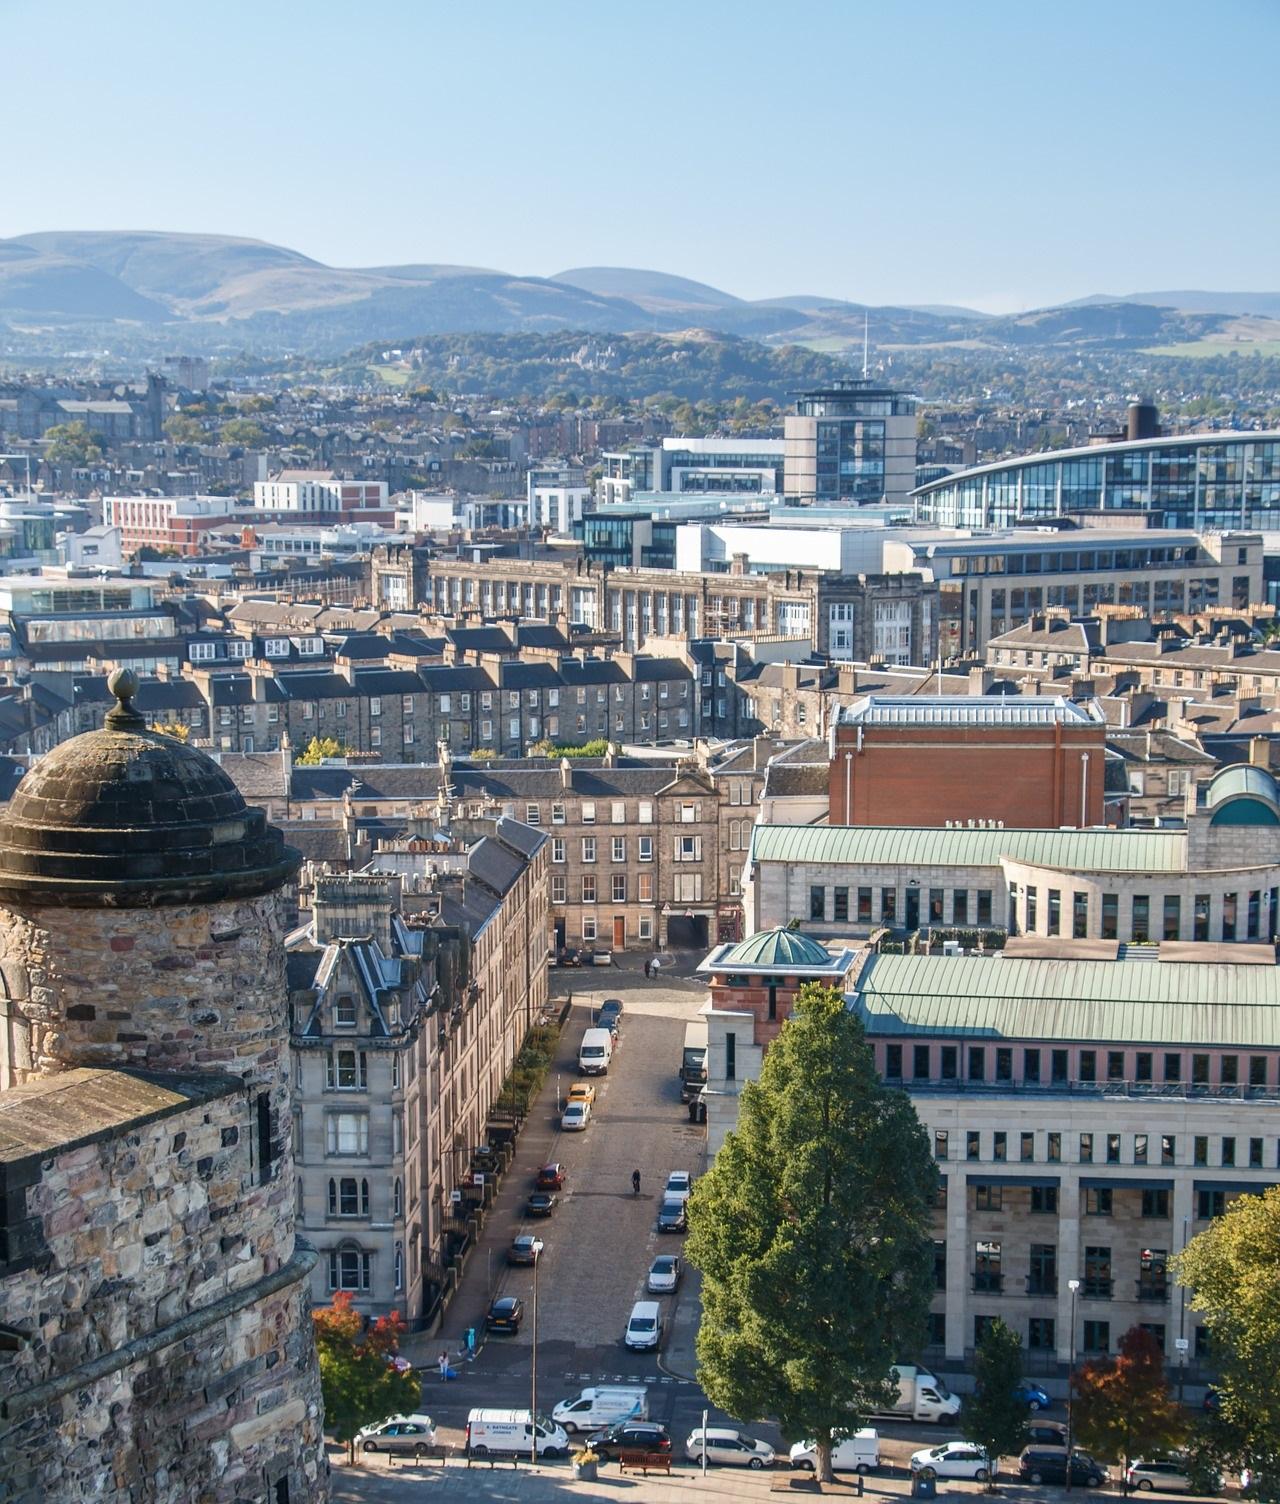 A view of a street in Edinburgh.